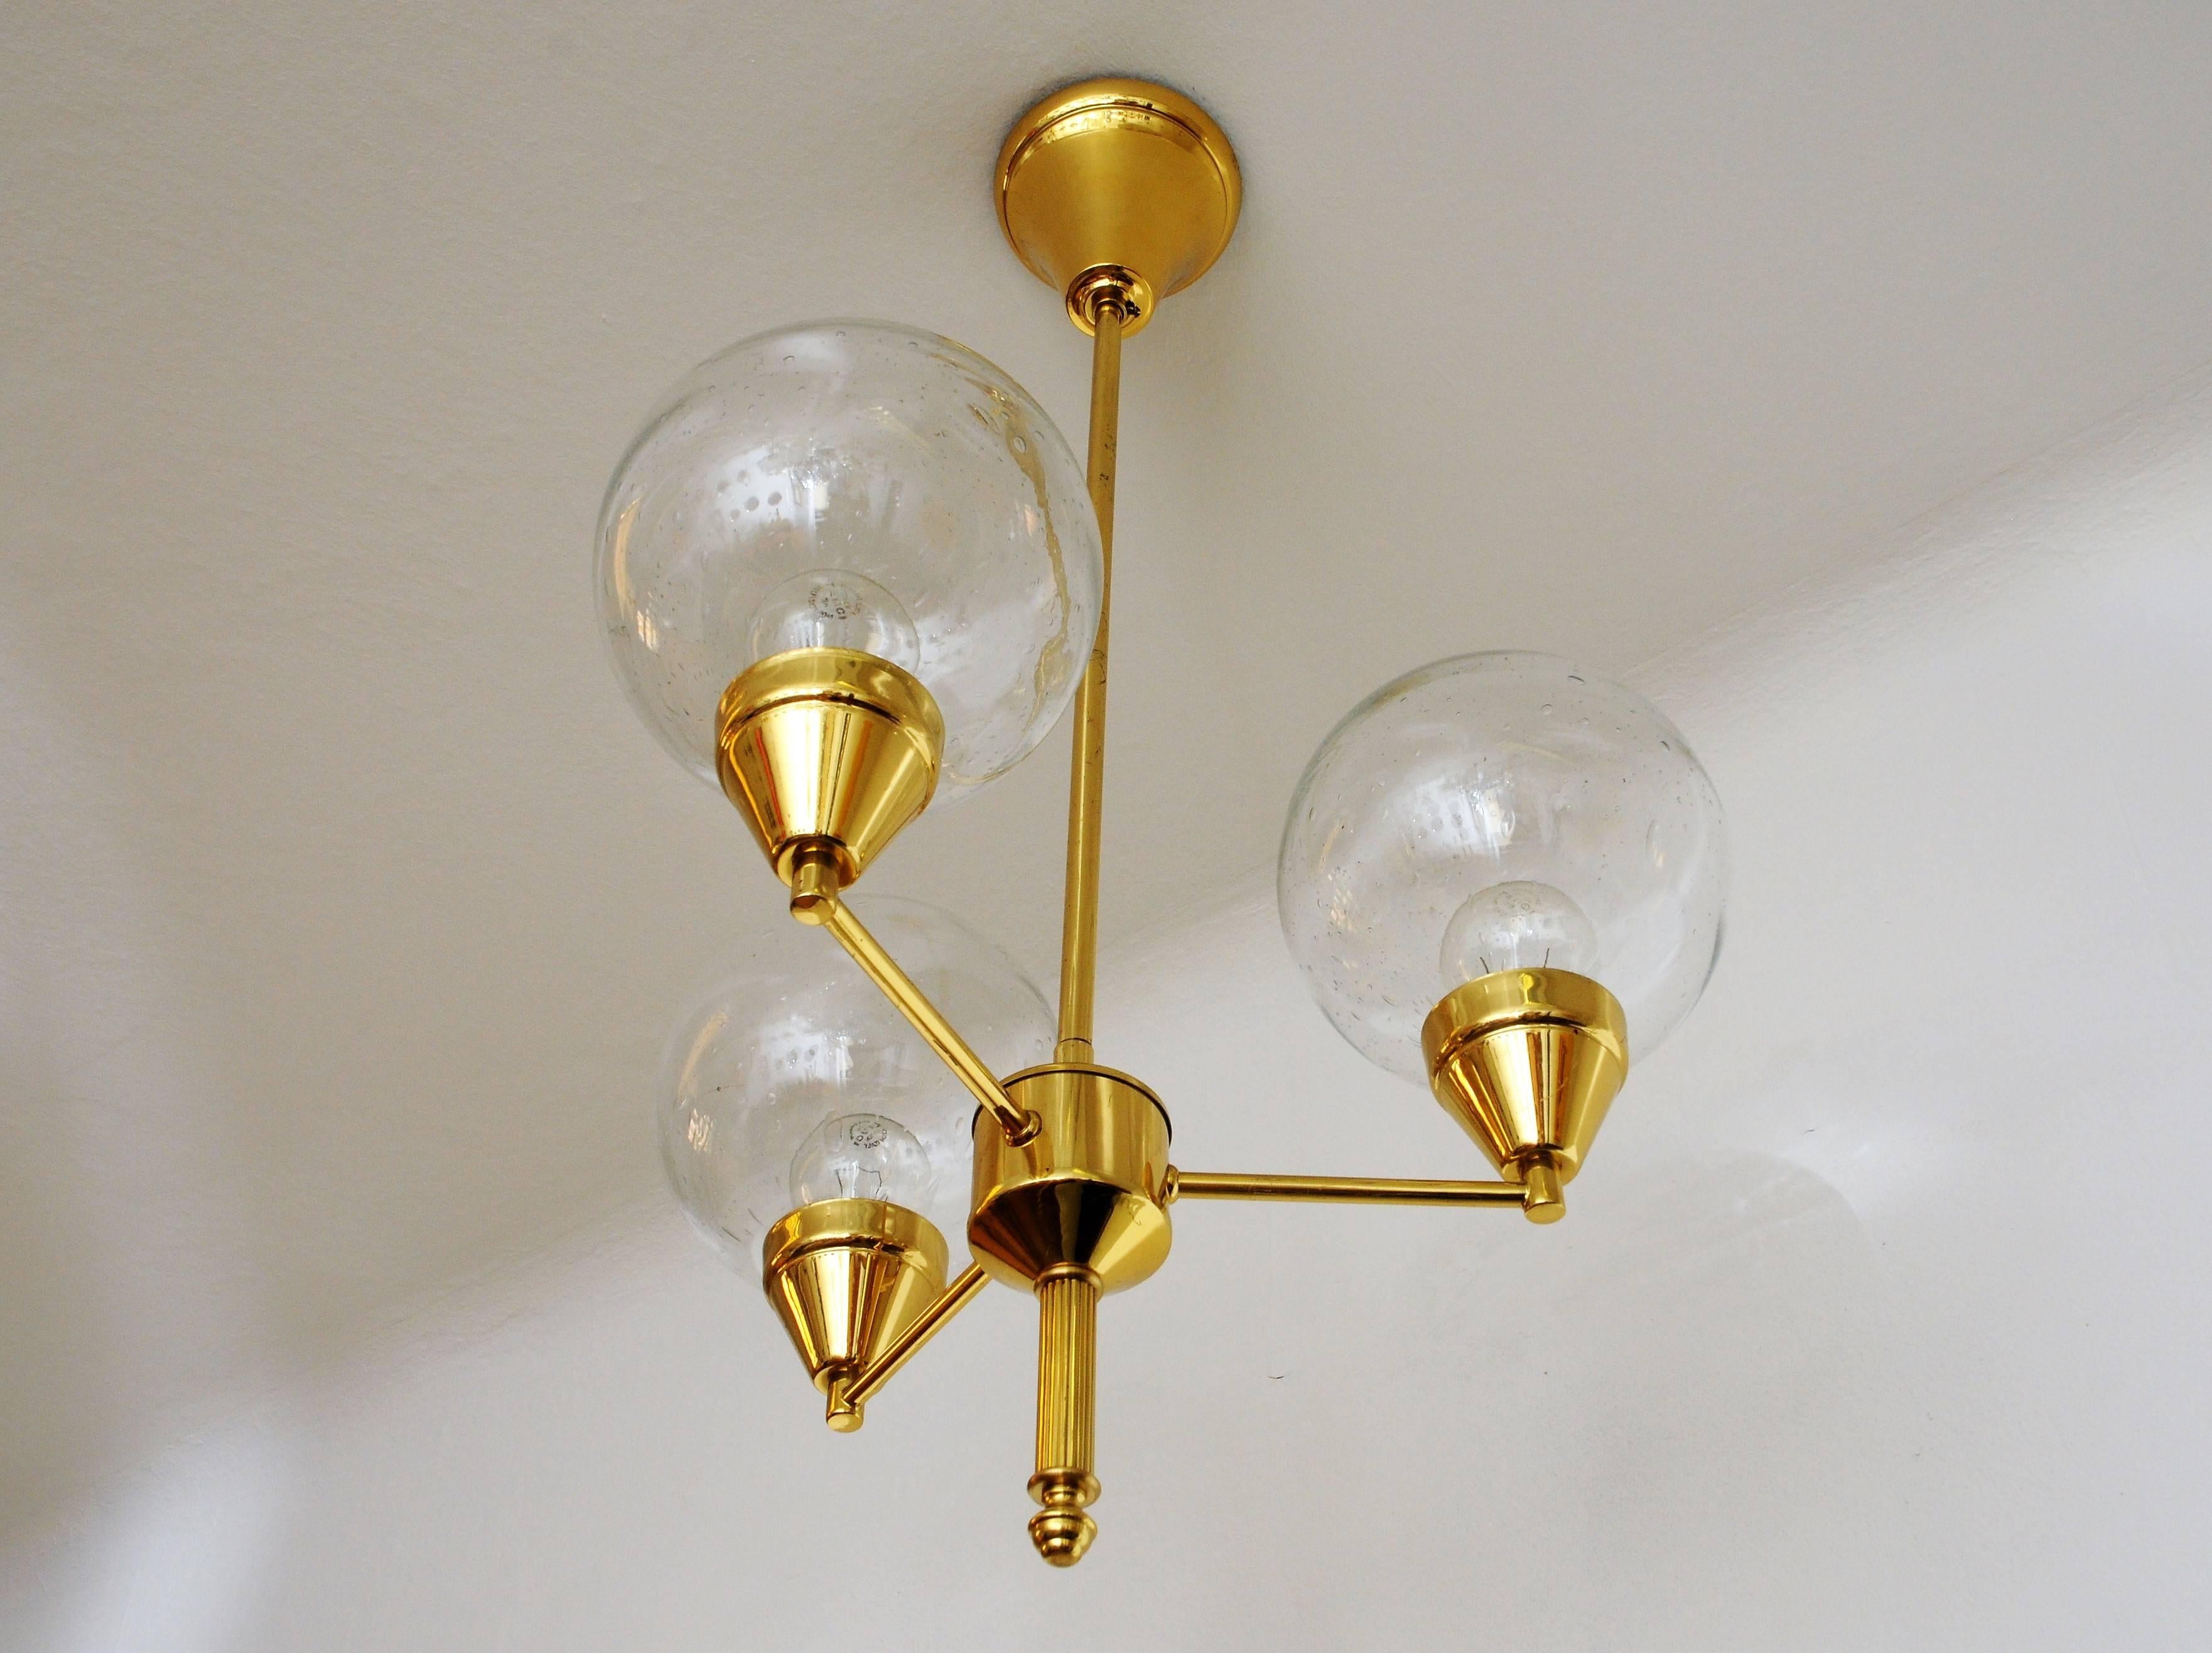 Midcentury Brass Ceiling Lamp with Three Clear Glass Domes 1960s, Sweden (Skandinavische Moderne)